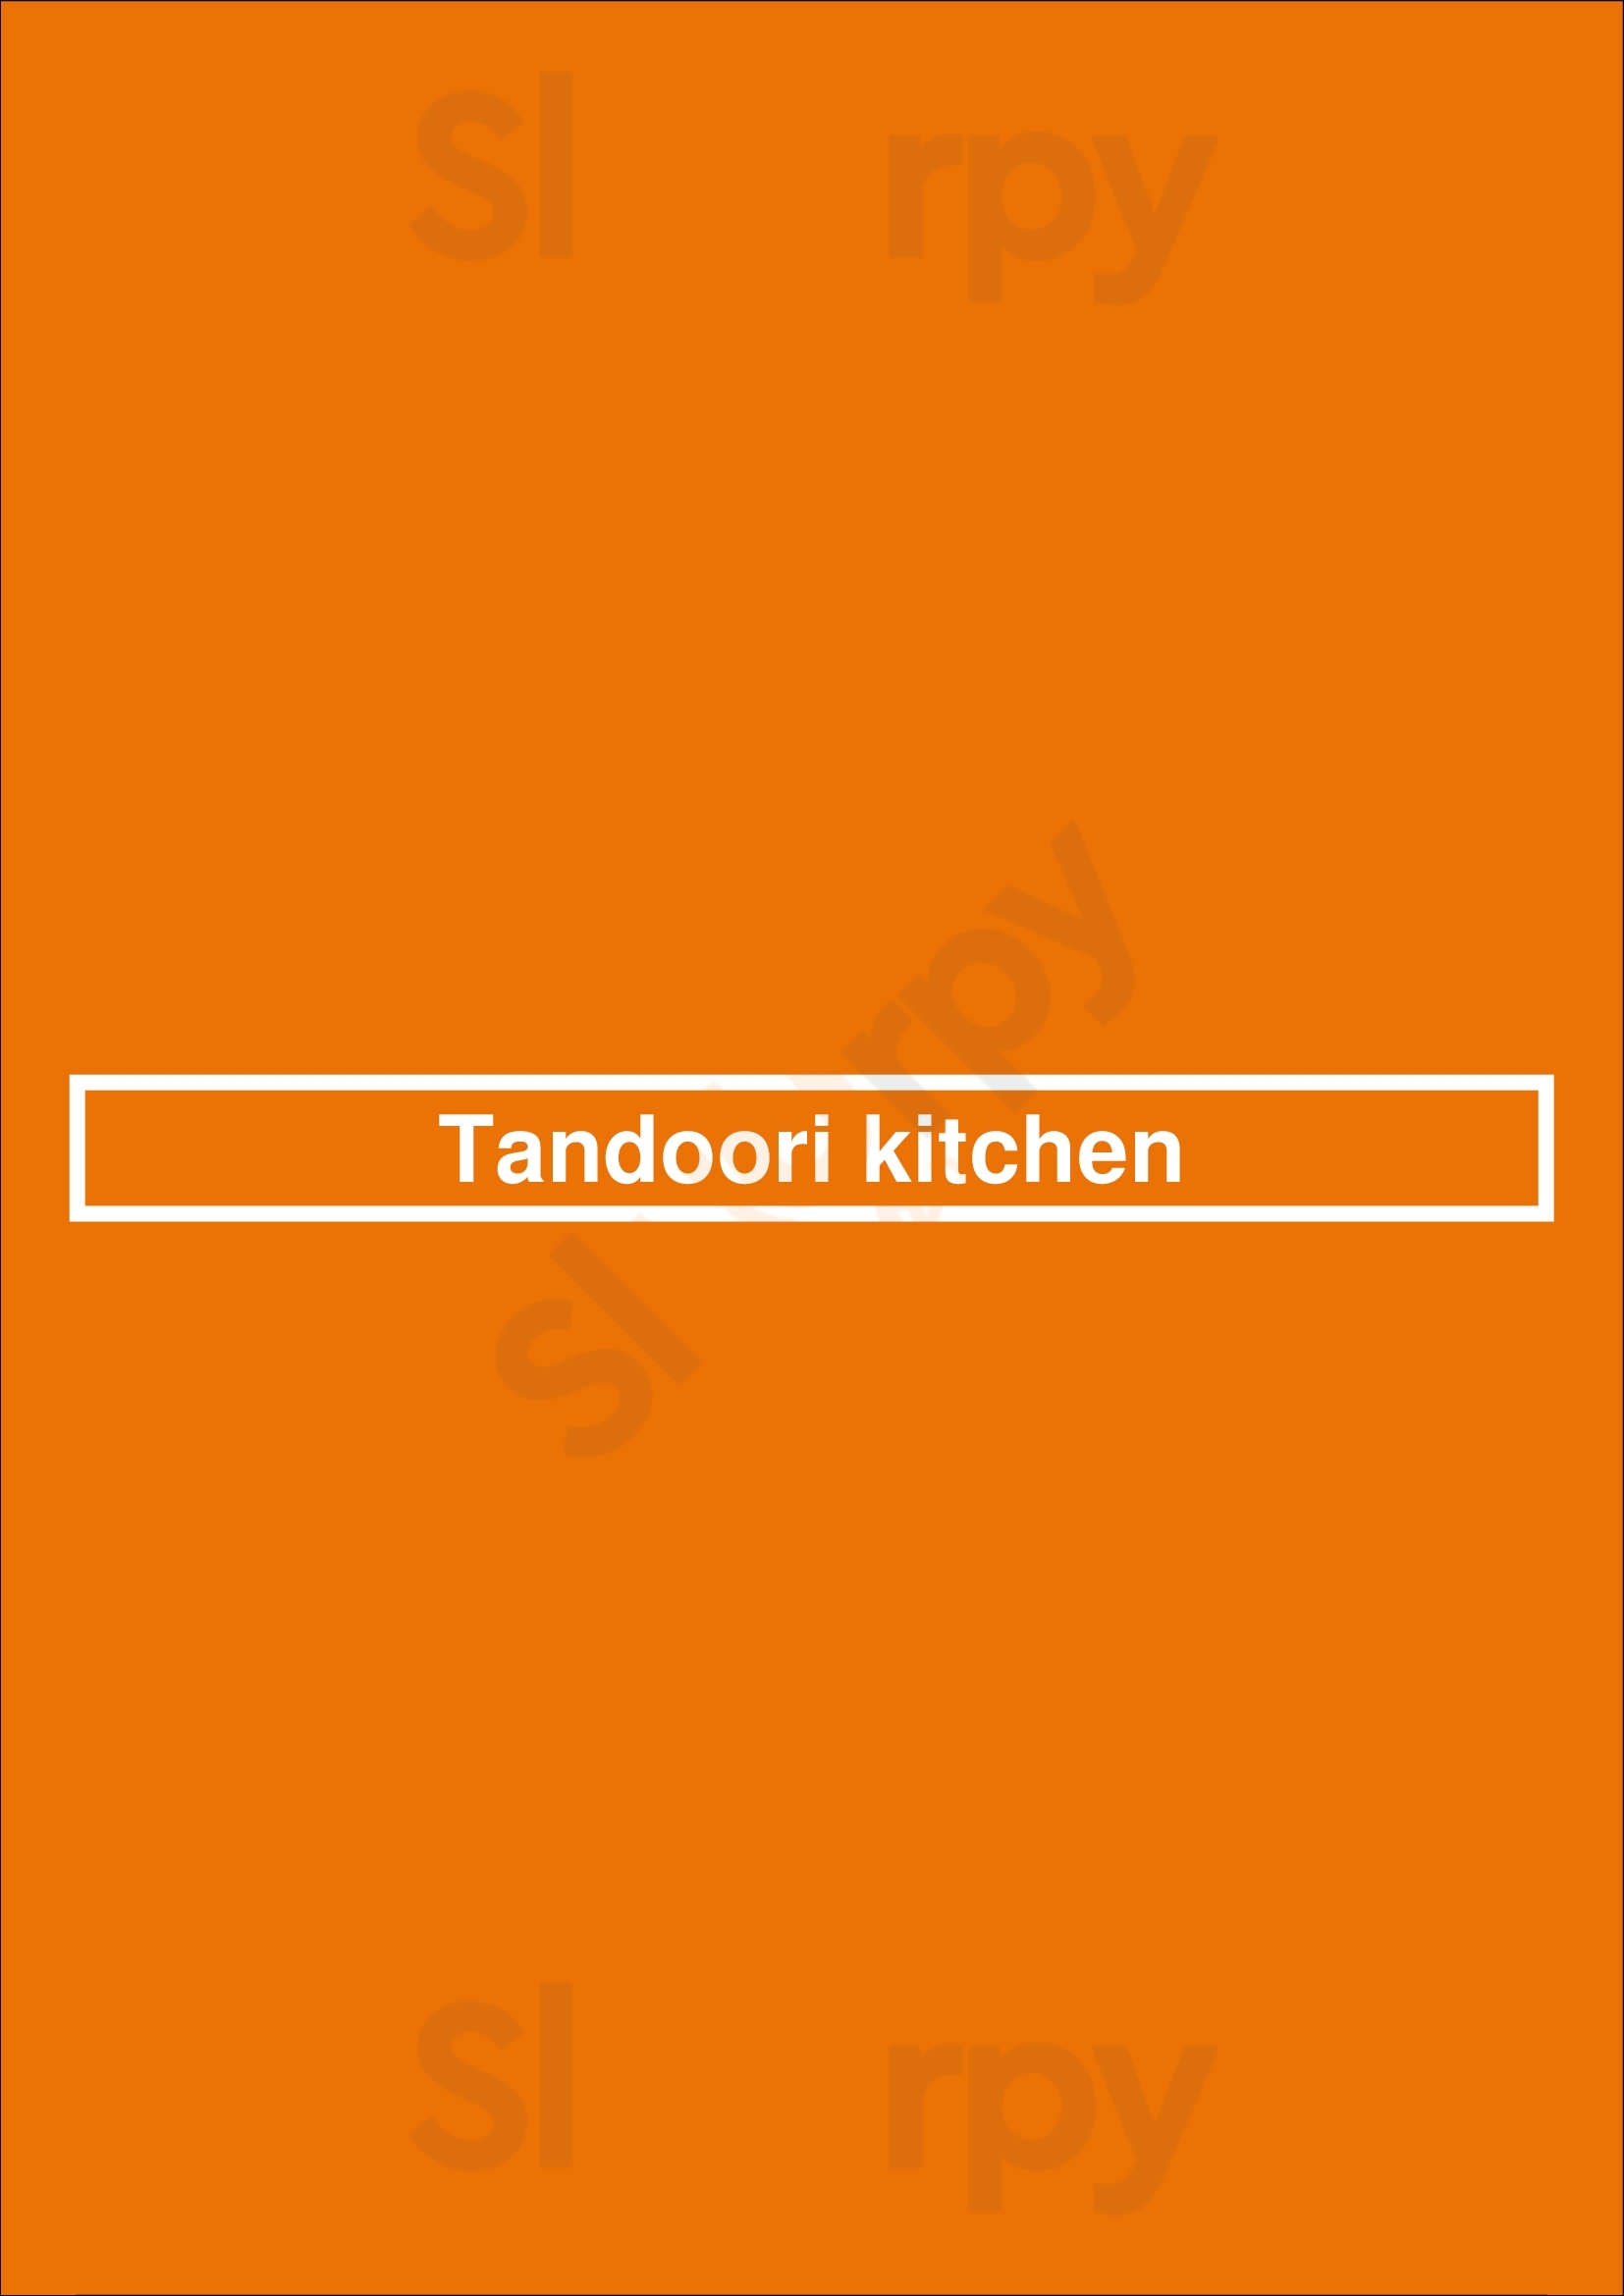 Tandoori Kitchen Lafayette Menu - 1